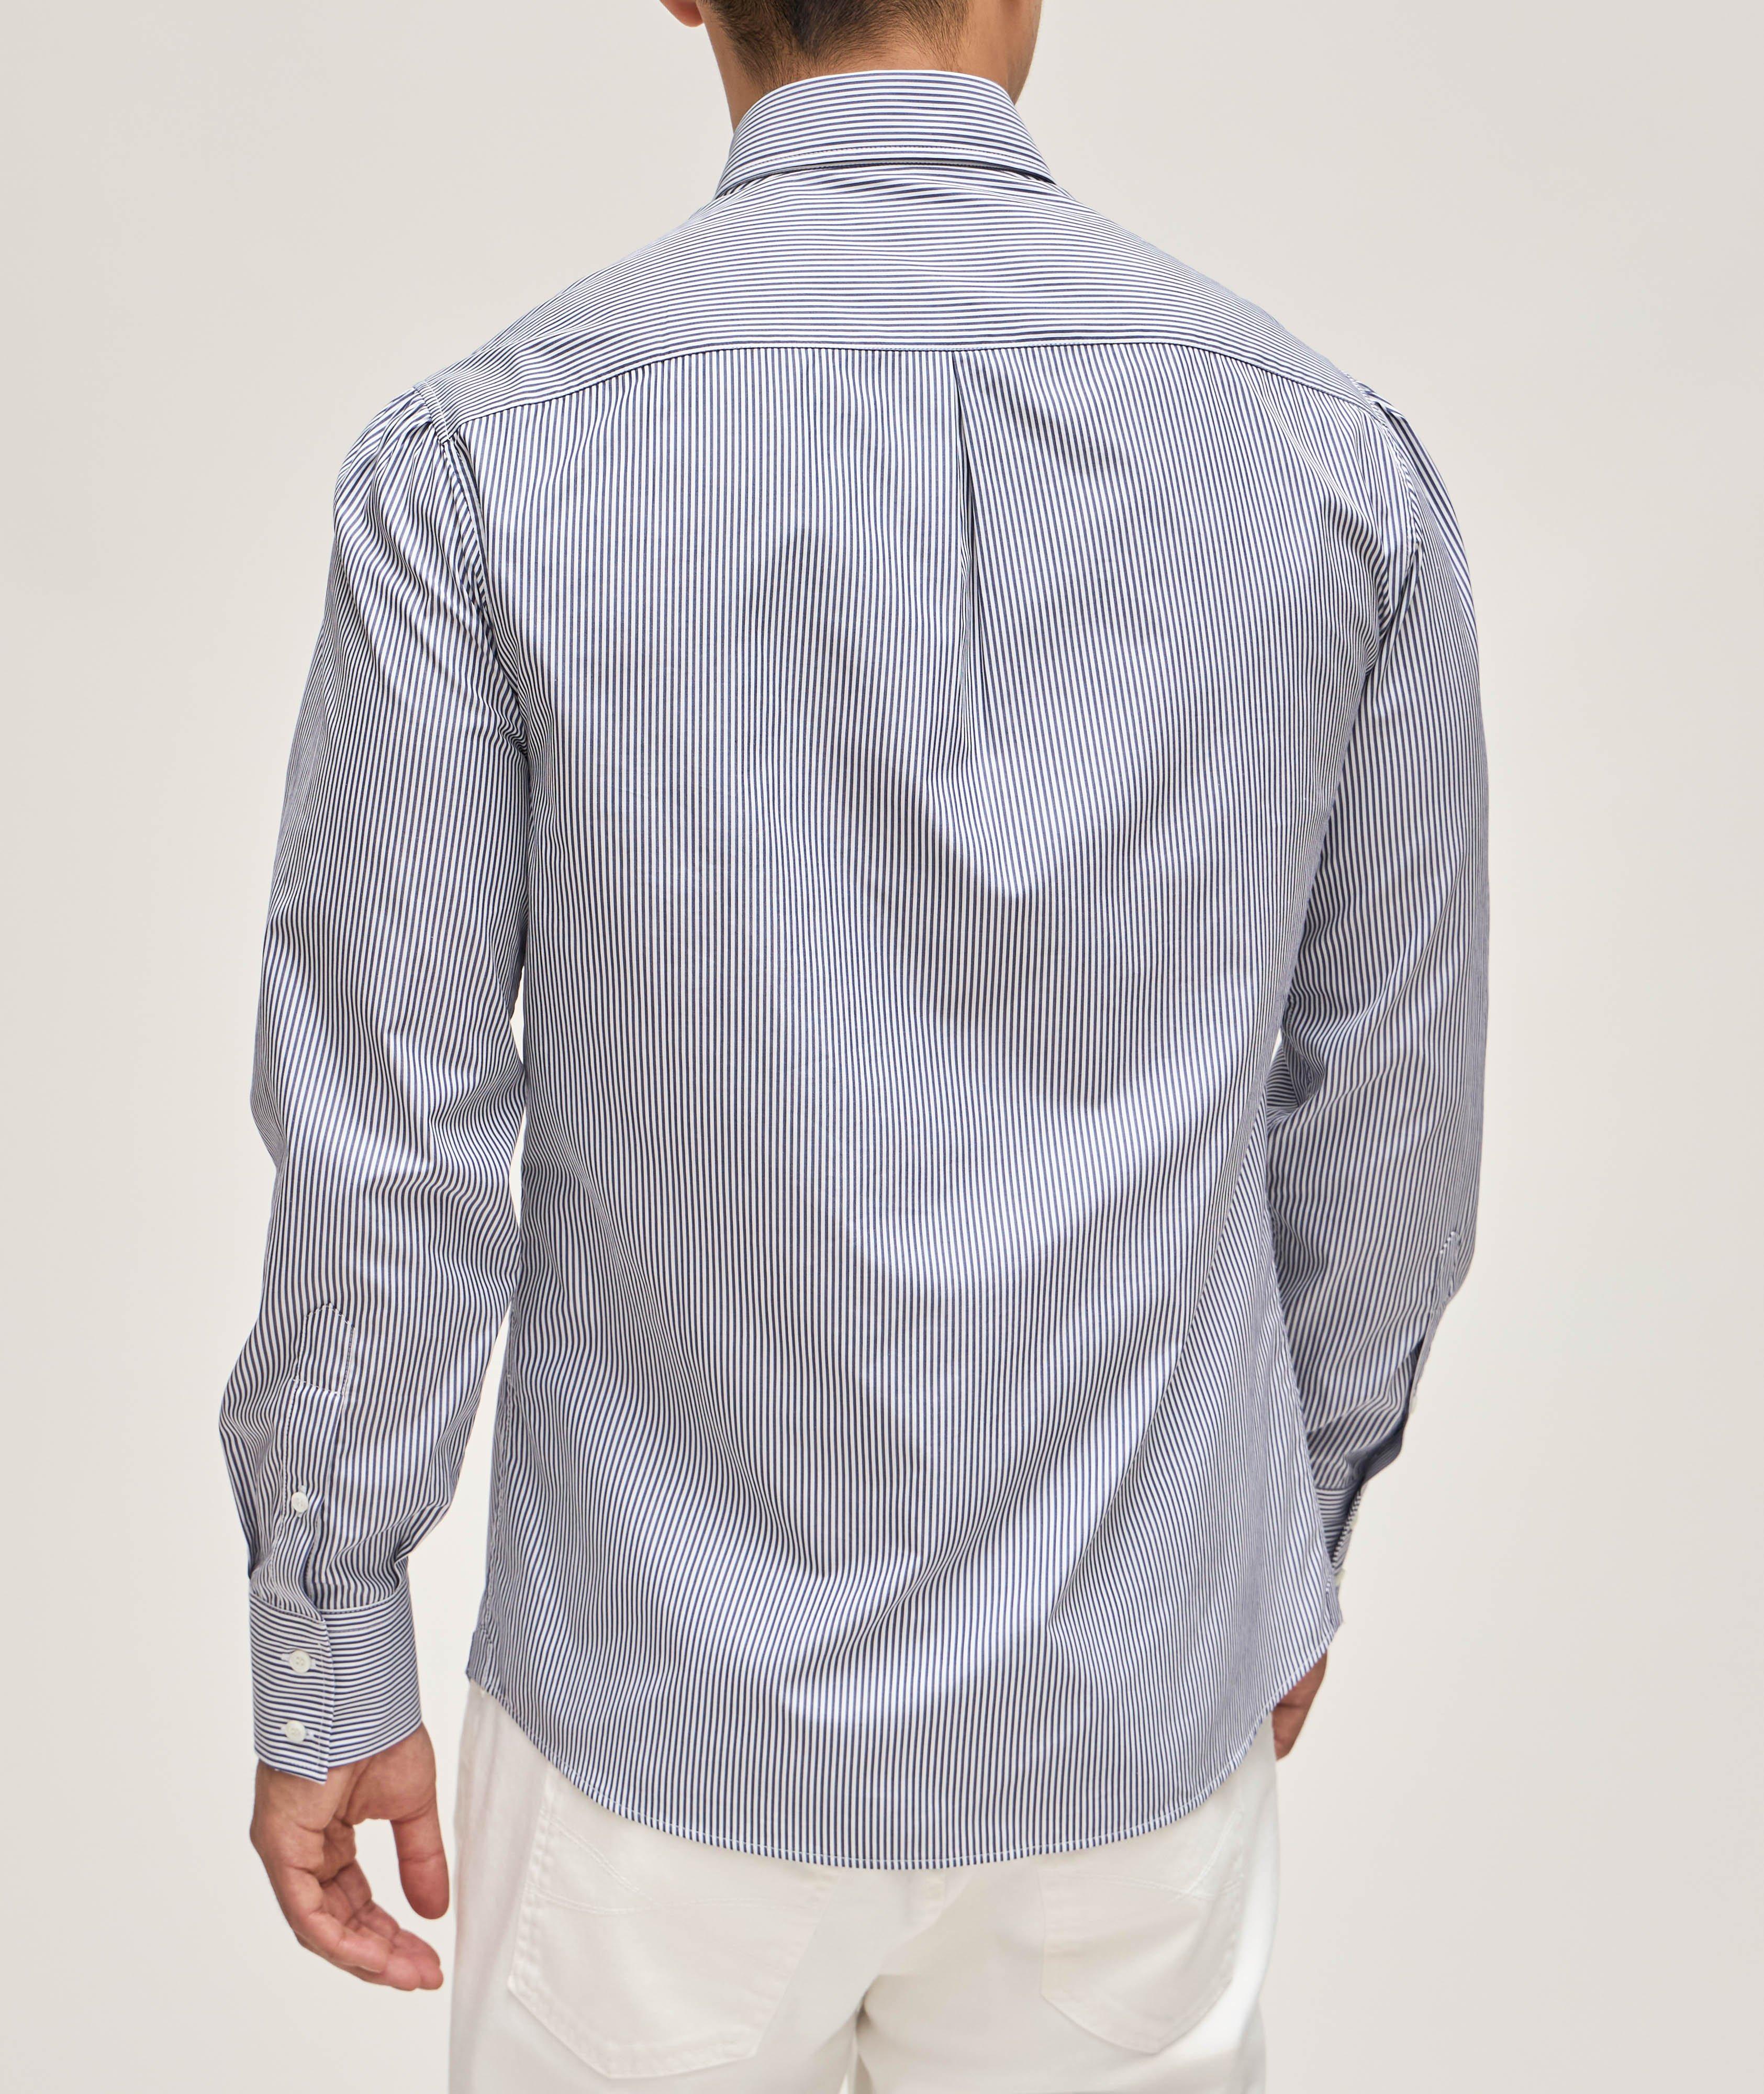 Basic Fit Striped Oxford Cotton Sport Shirt  image 2